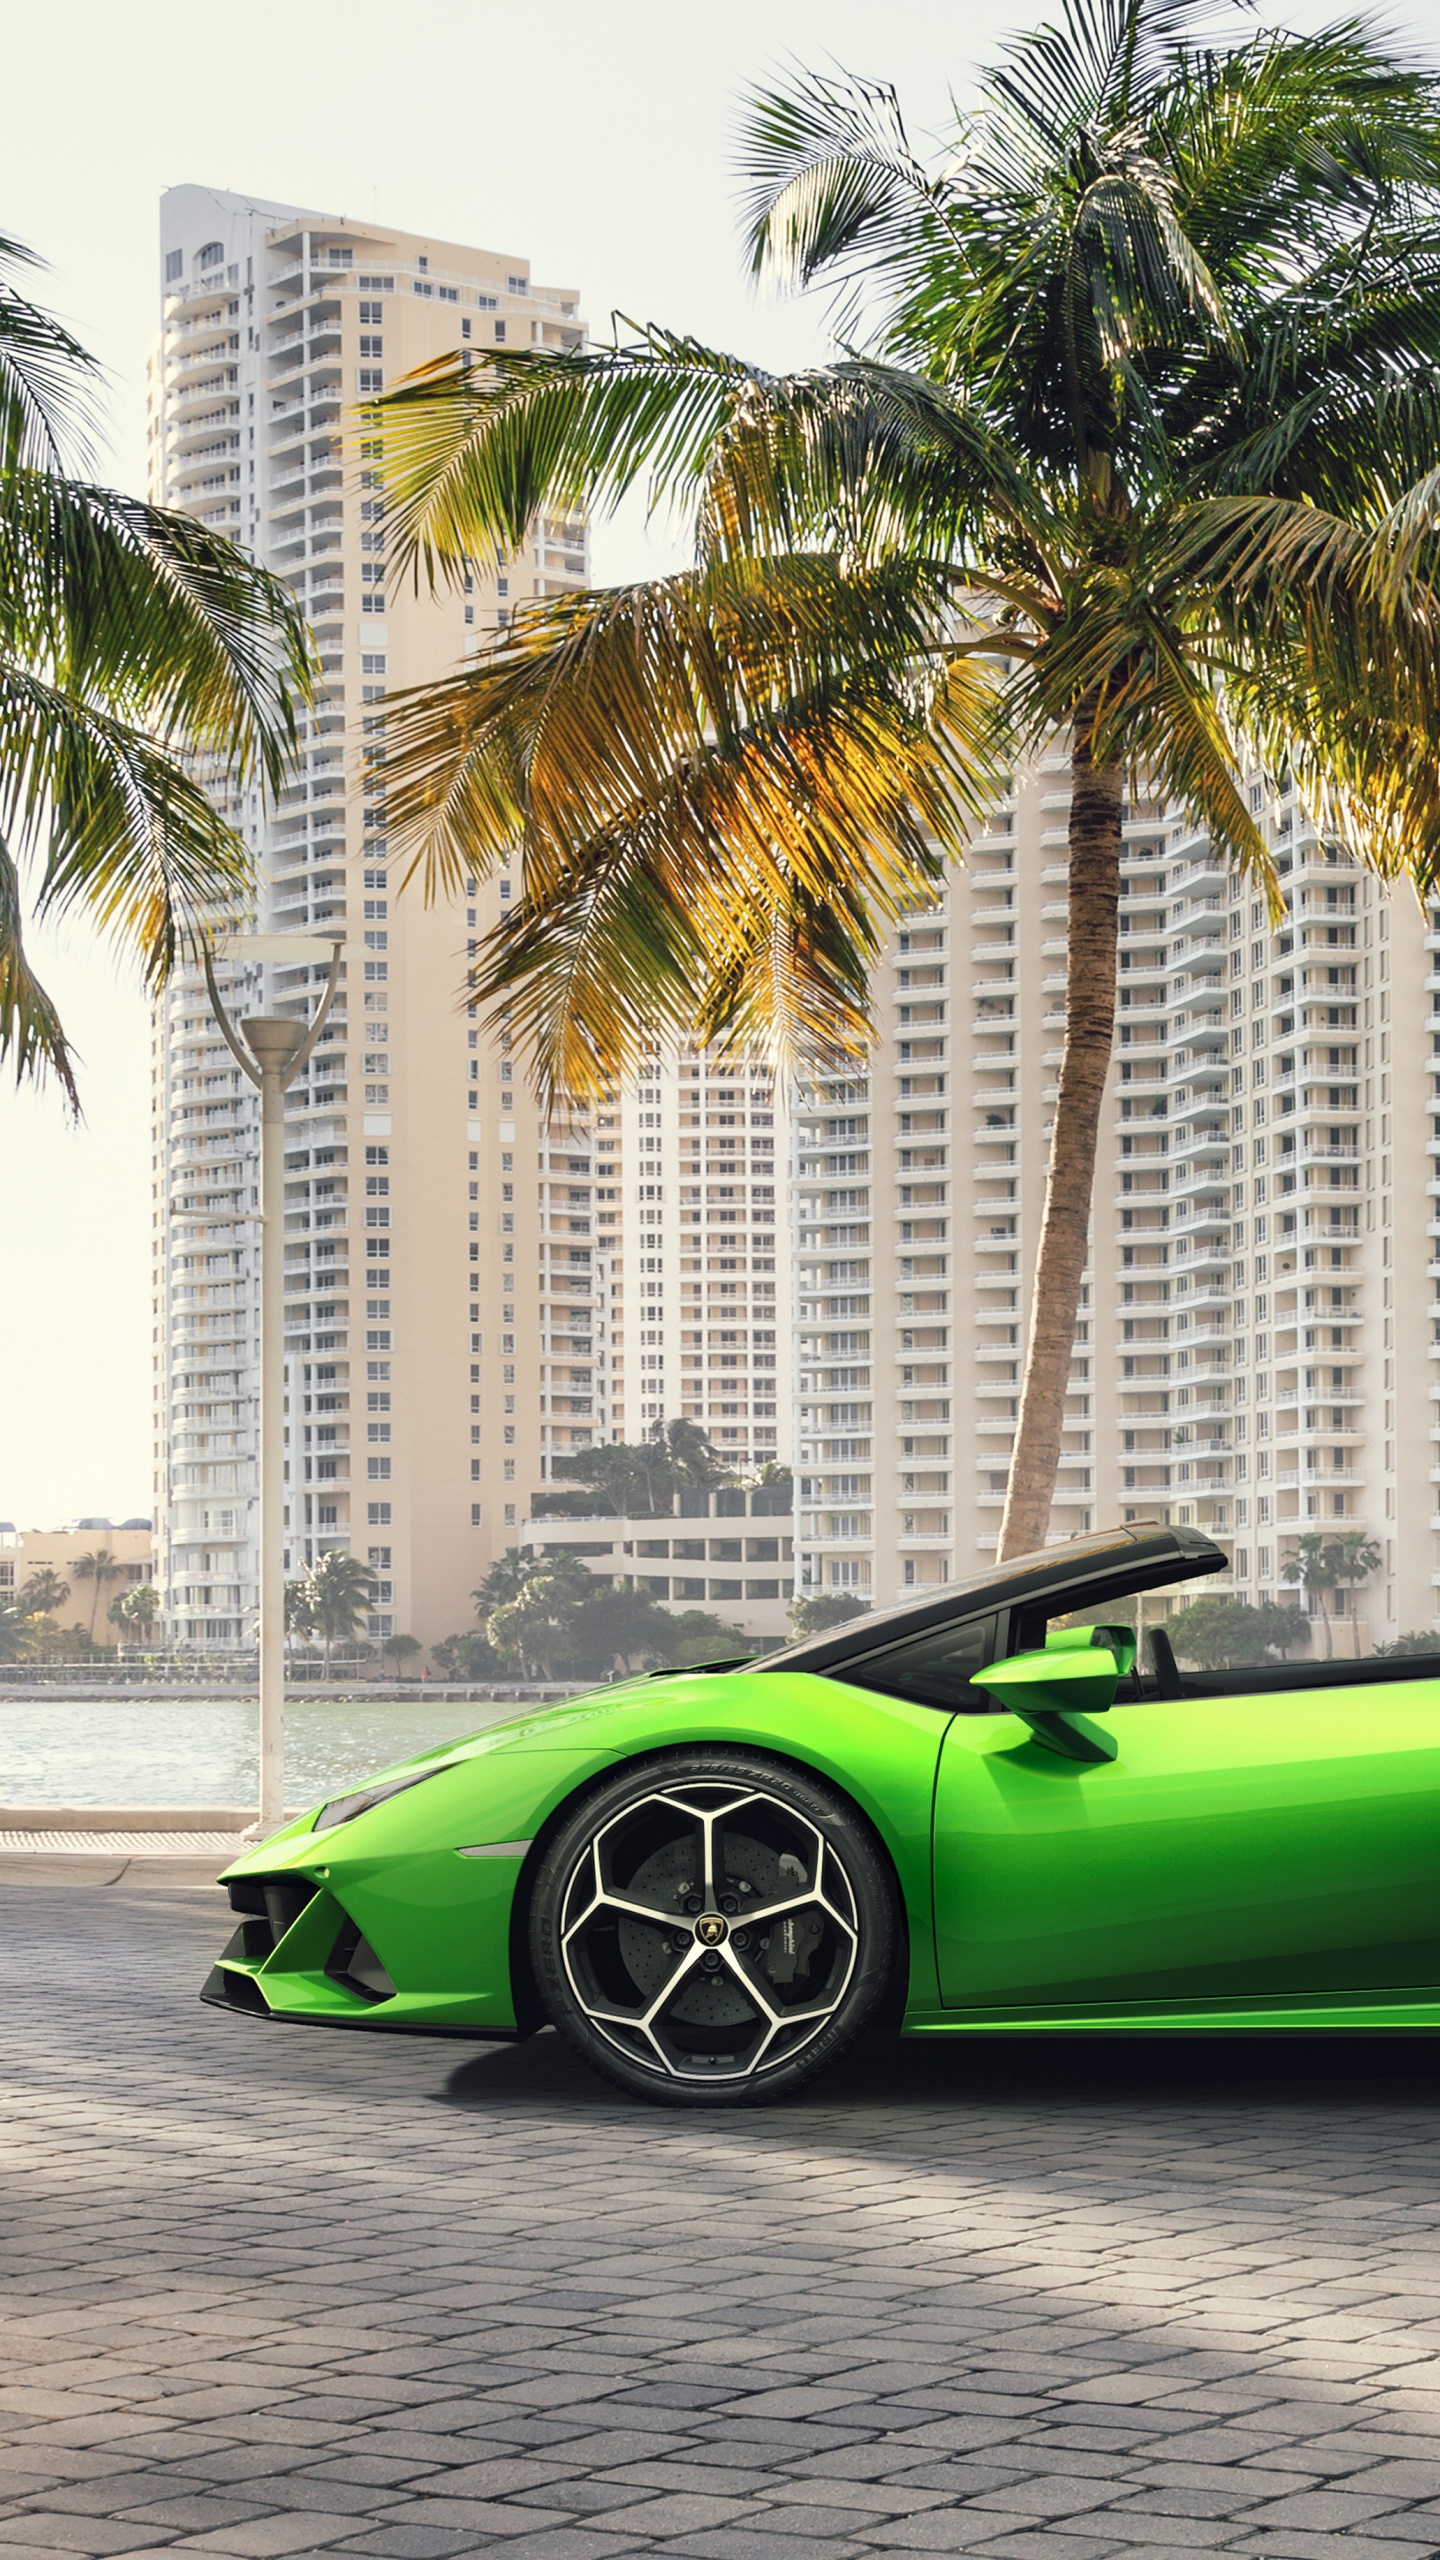 Green Ferrari Sports Car on Road During Daytime. Wallpaper in 1440x2560 Resolution